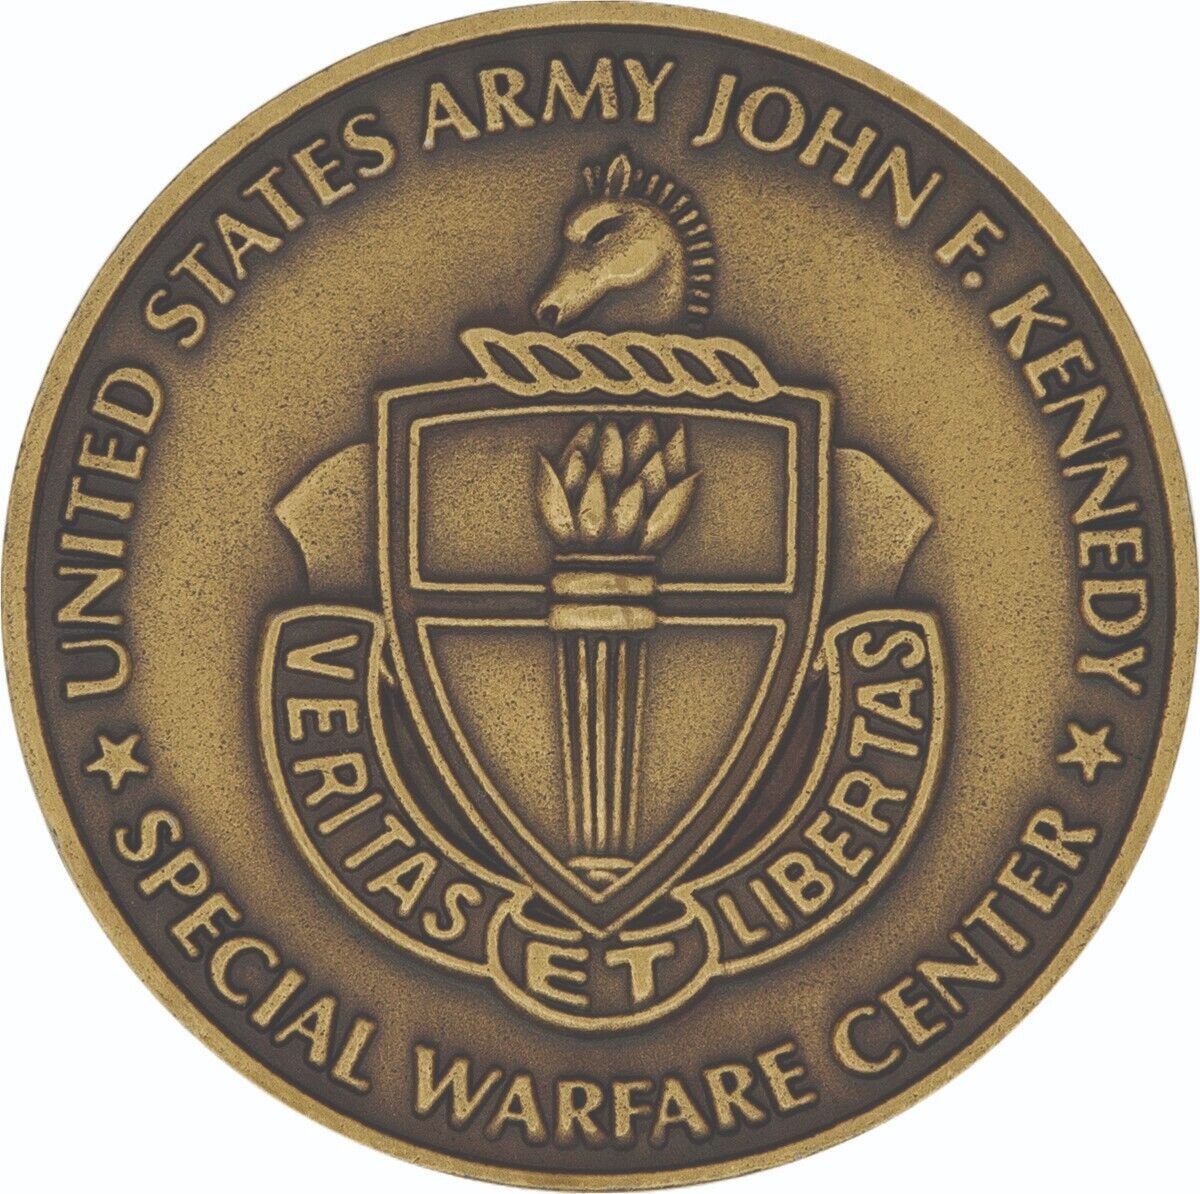 ARMY JOHN F. KENNEDY JFK SPECIAL WARFARE CHALLENGE COIN